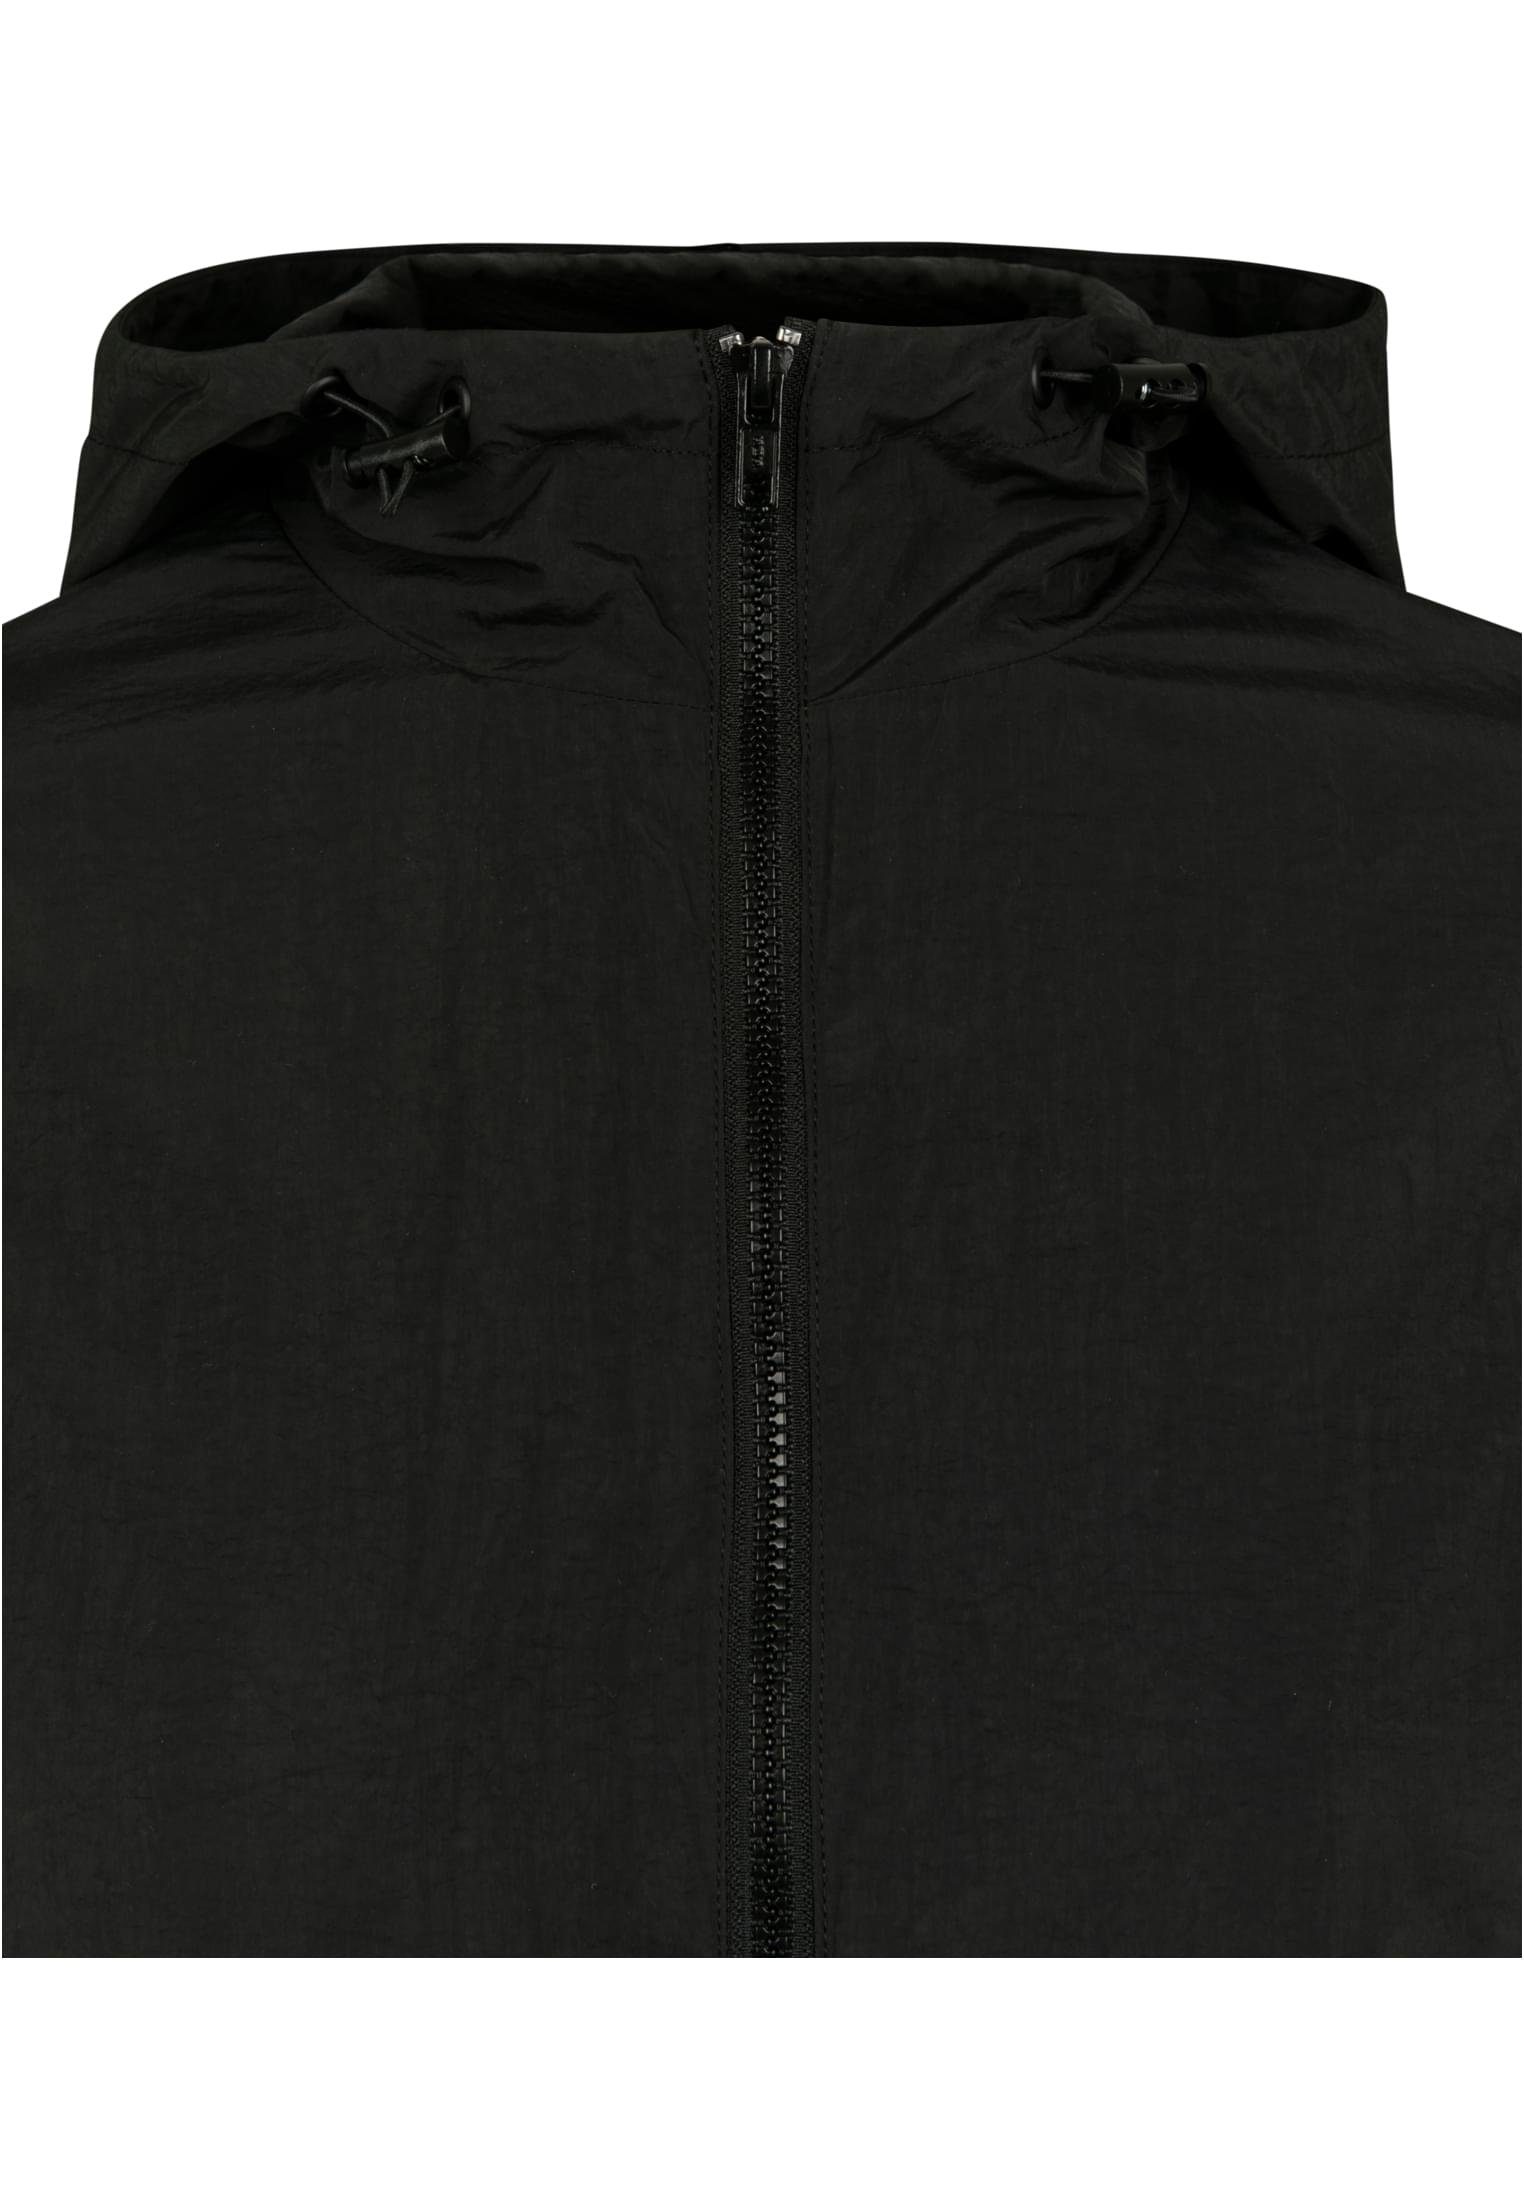 URBAN CLASSICS Outdoorjacke Damen Batwing Crinkle black/white (1-St) Ladies Jacket